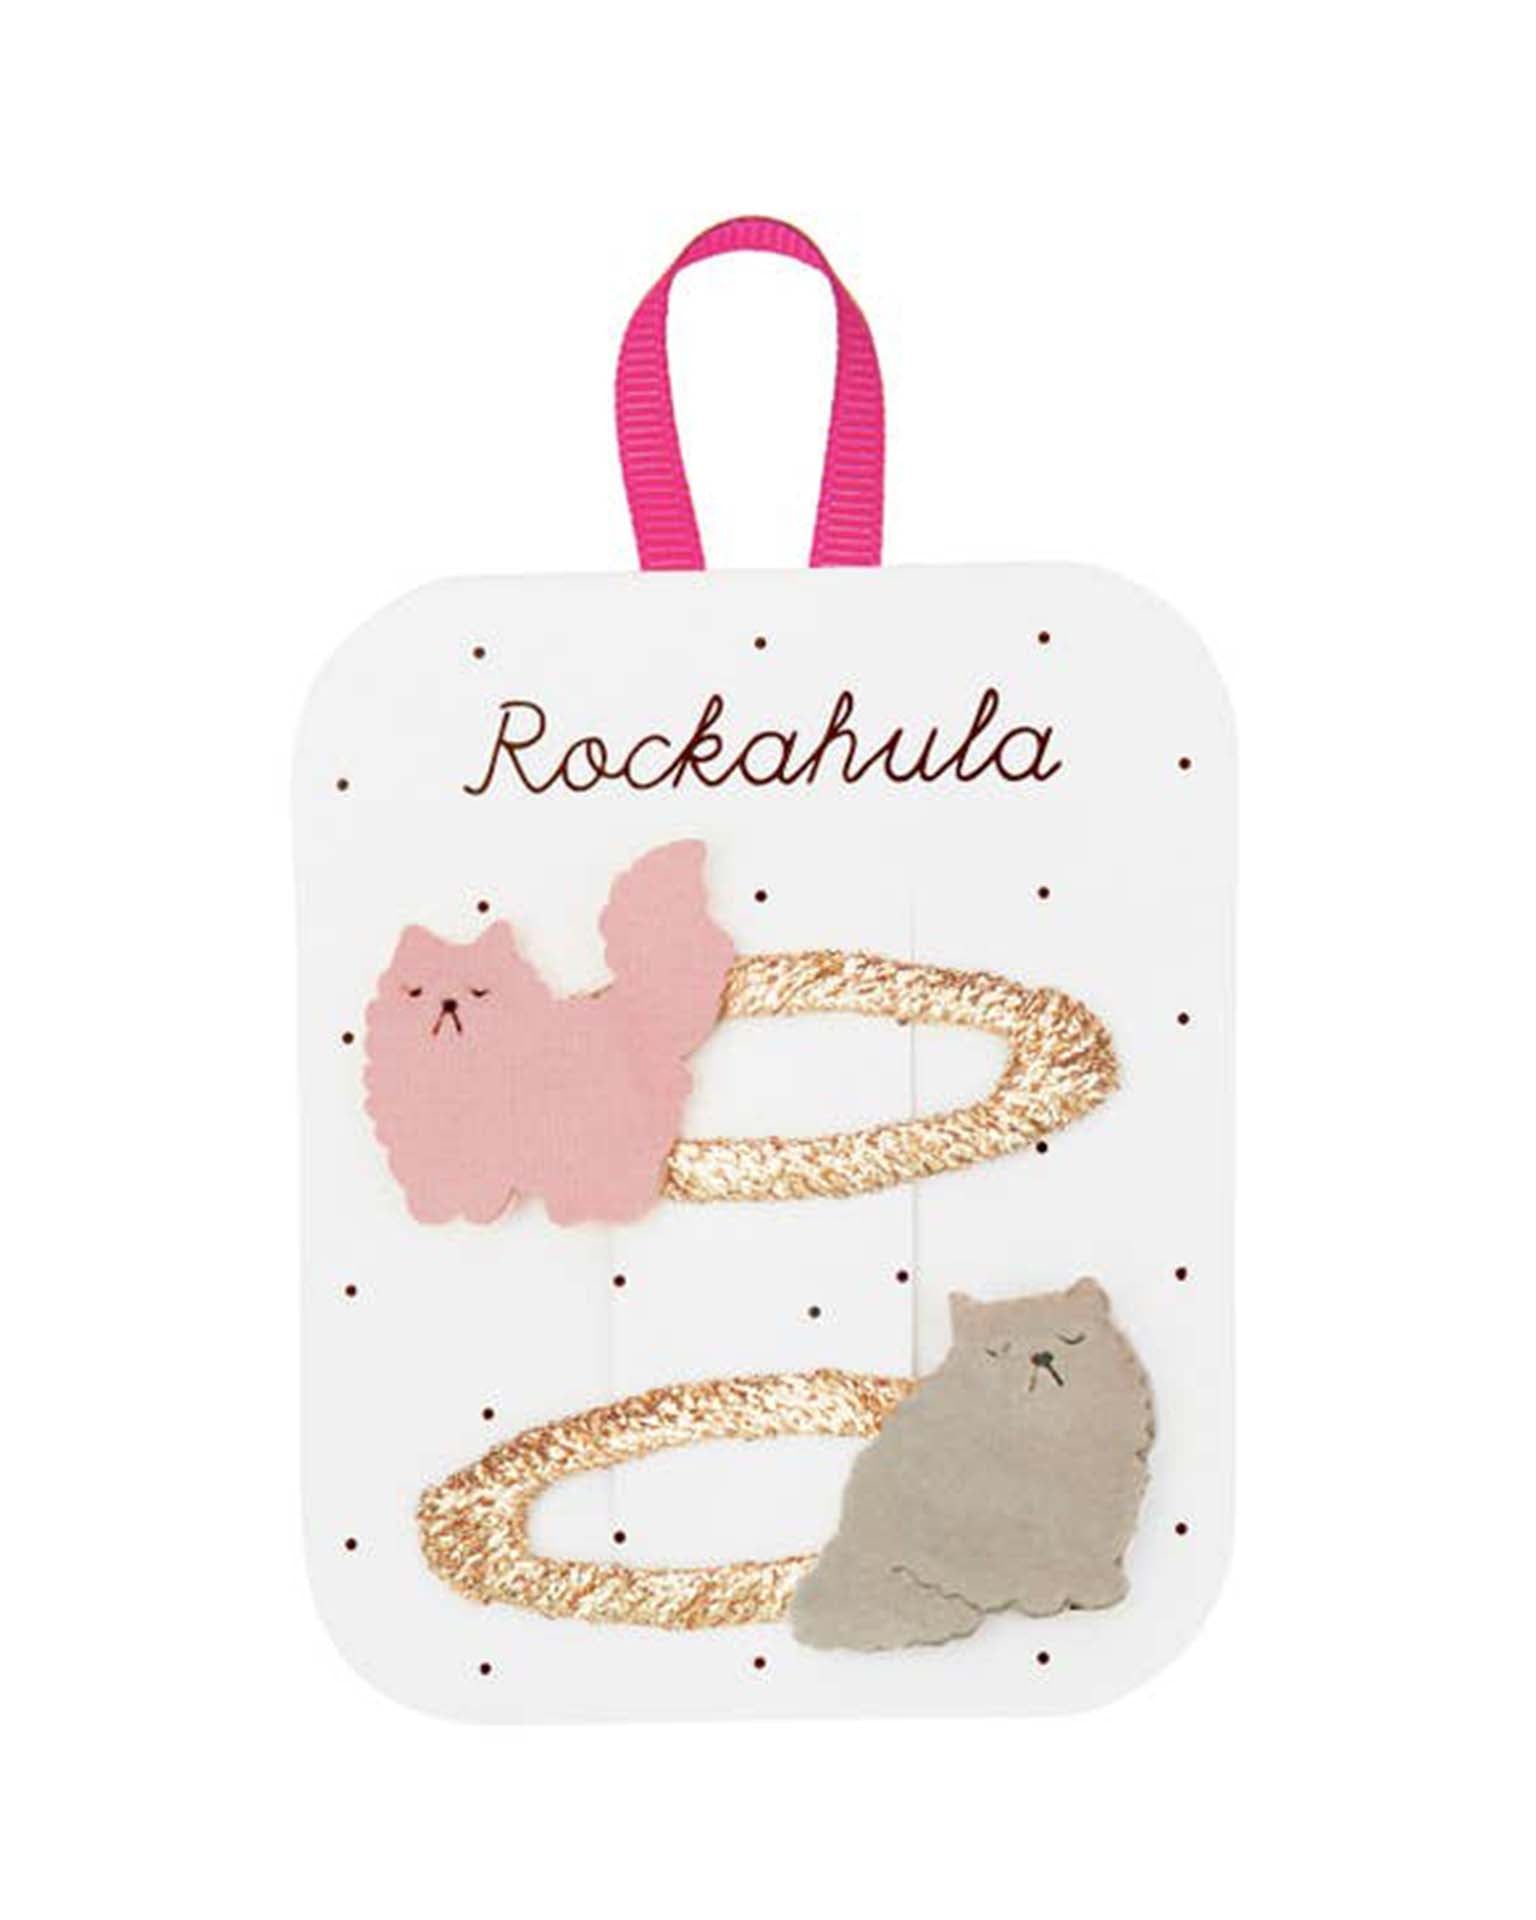 Little rockahula kids accessories sour puff persian cat clips